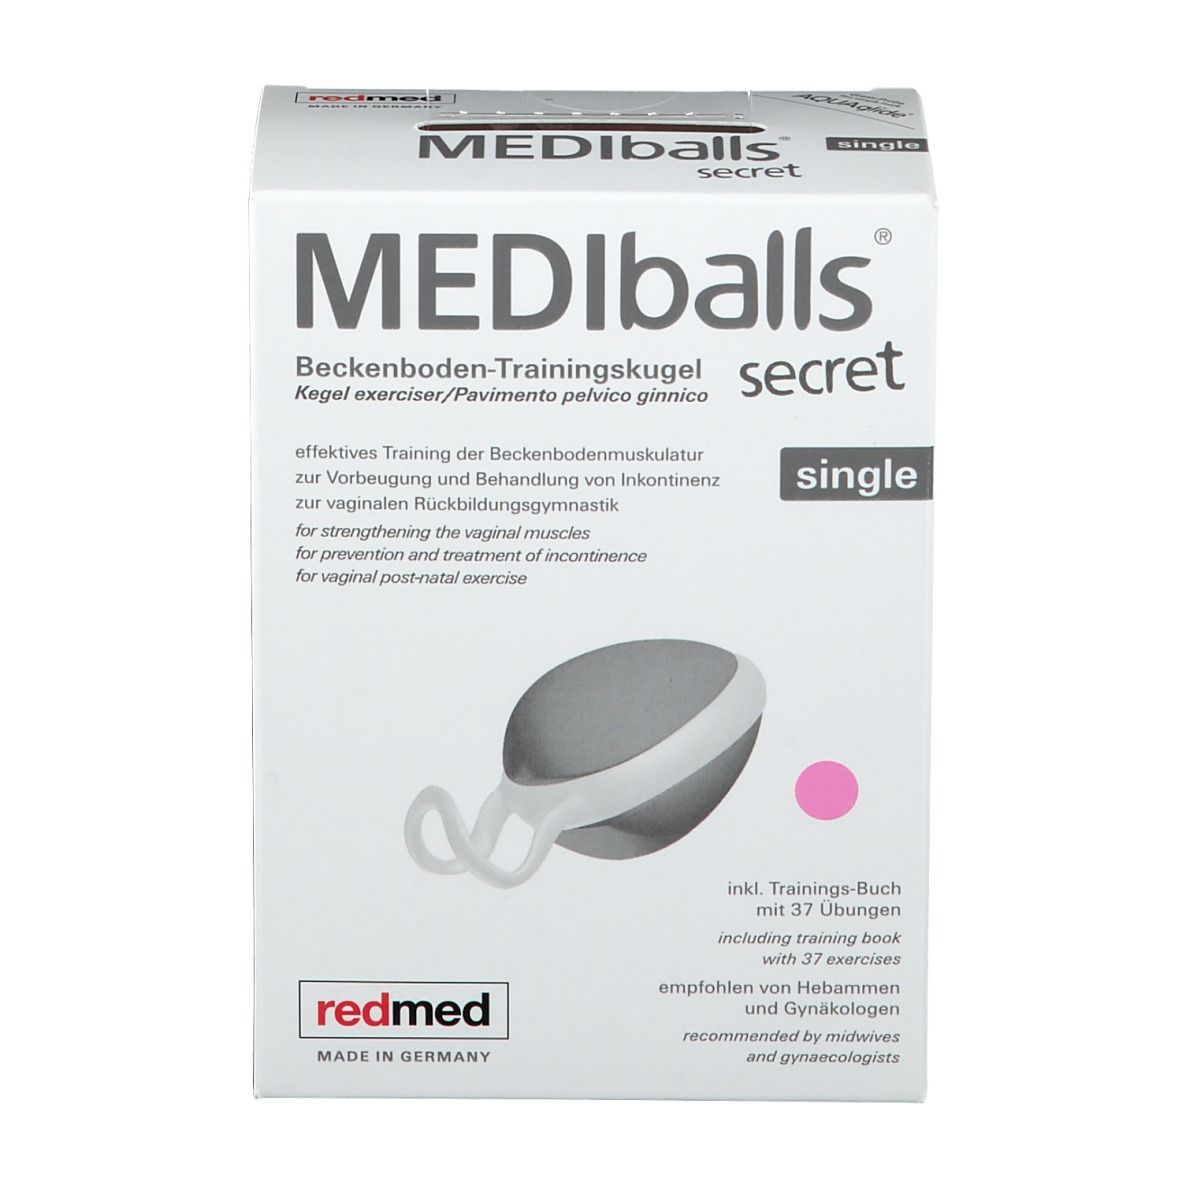 MEDIballs® secret single rose-weiß